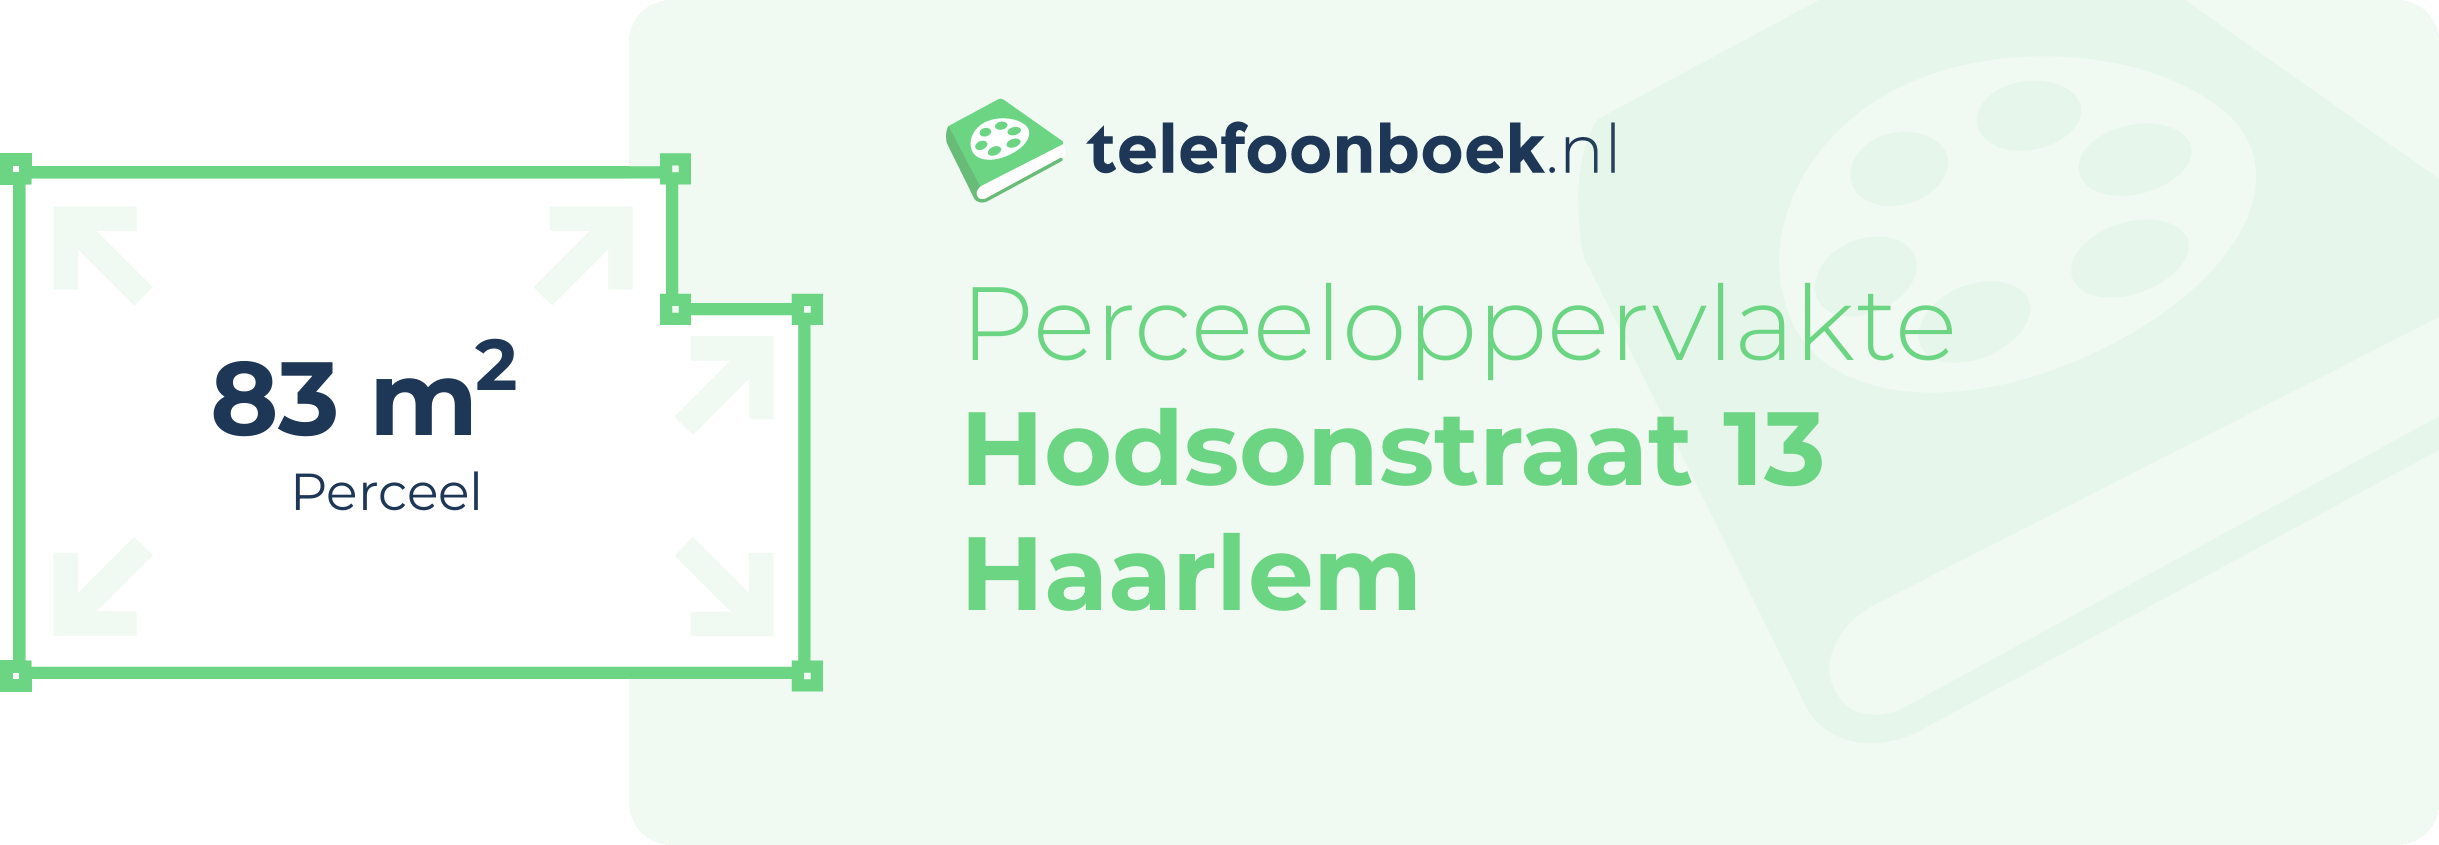 Perceeloppervlakte Hodsonstraat 13 Haarlem